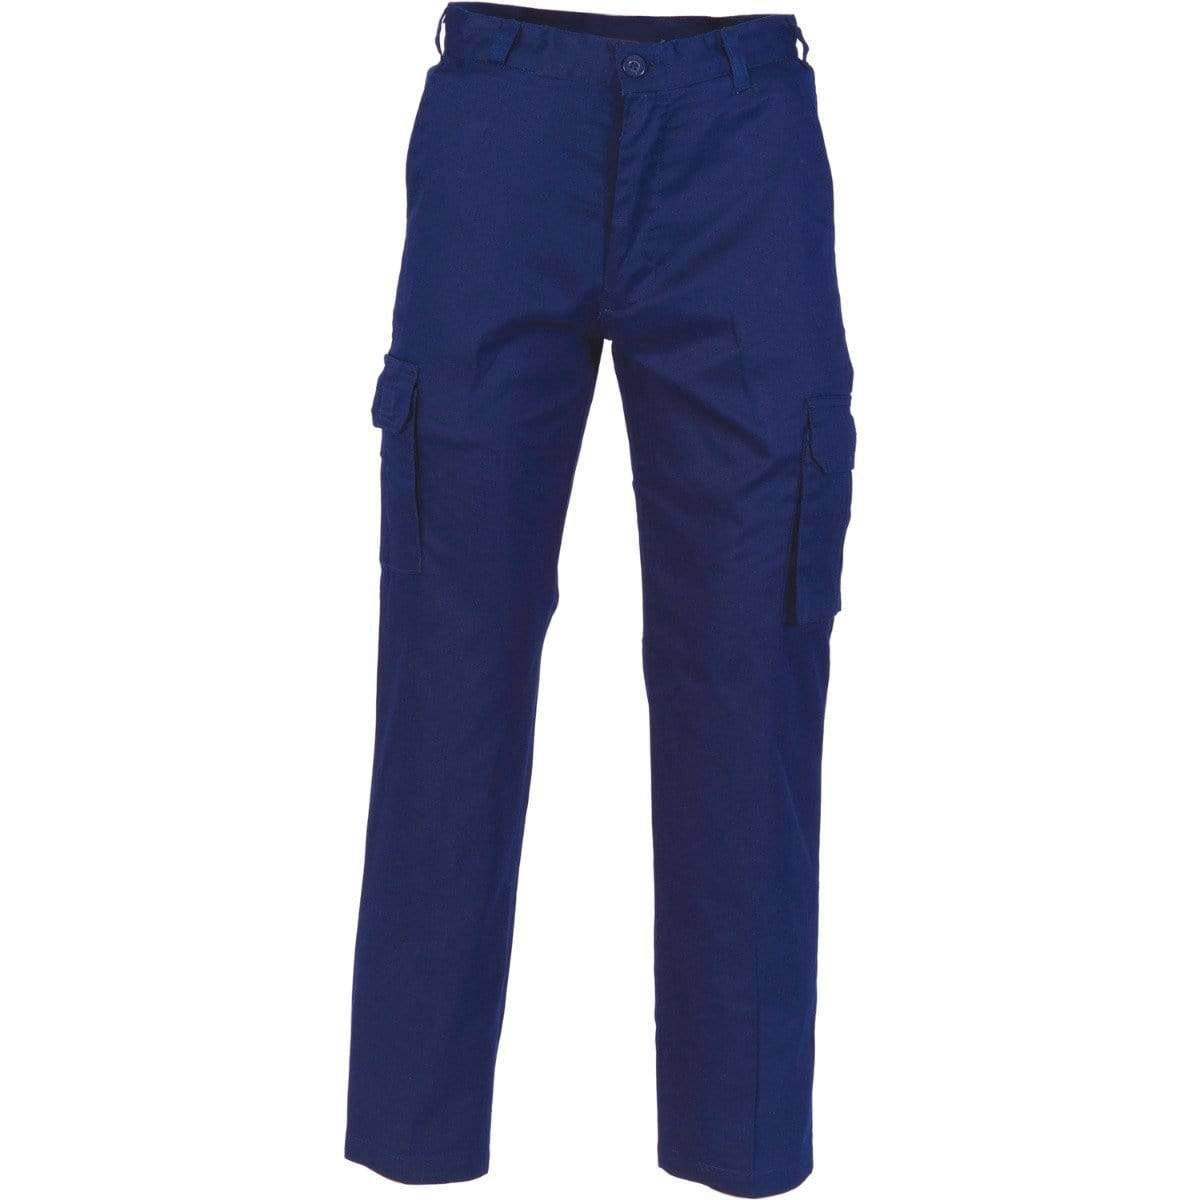 Dnc Workwear Ladies Lightweight Drill Cargo Pants - 3368 Work Wear DNC Workwear Navy 6 